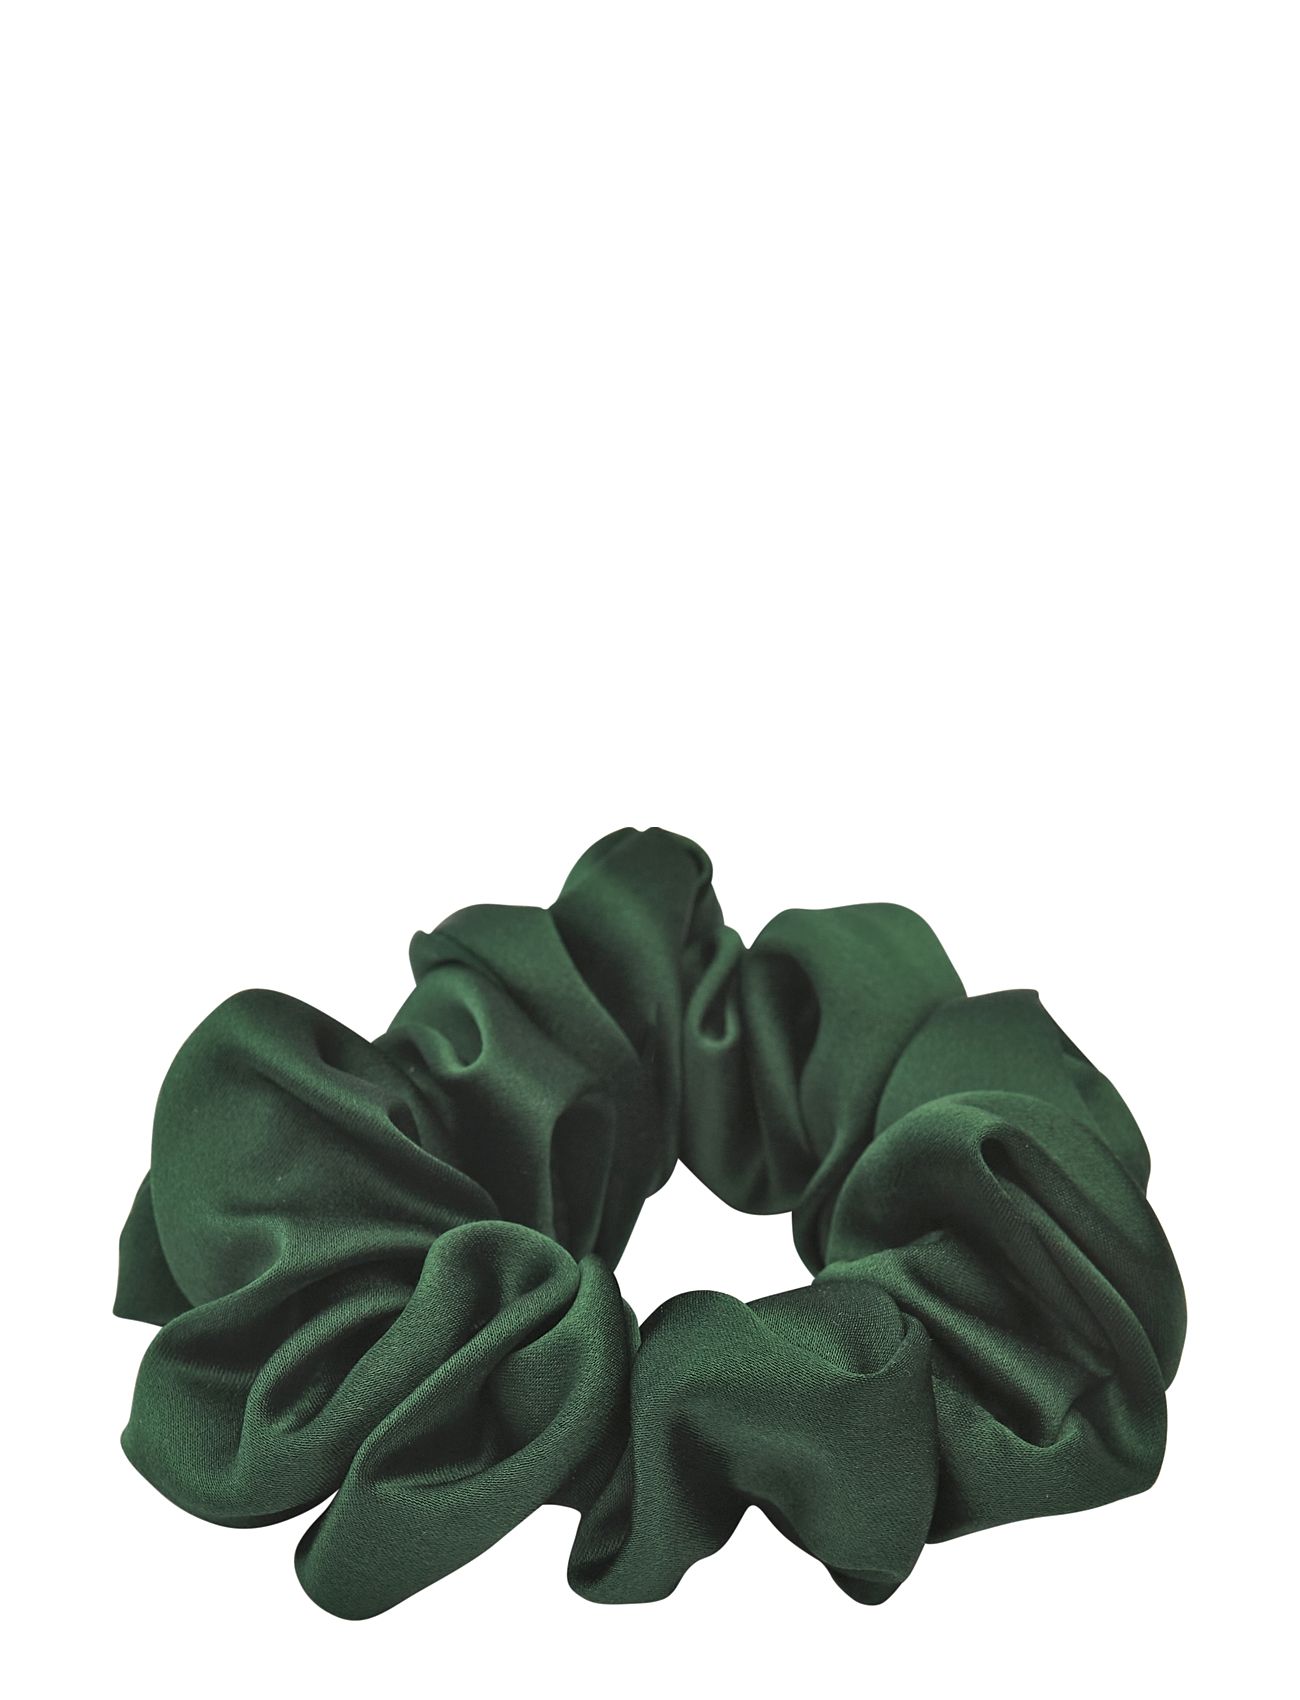 Mulberry Silk Scrunchie Accessories Hair Accessories Scrunchies Green Lenoites